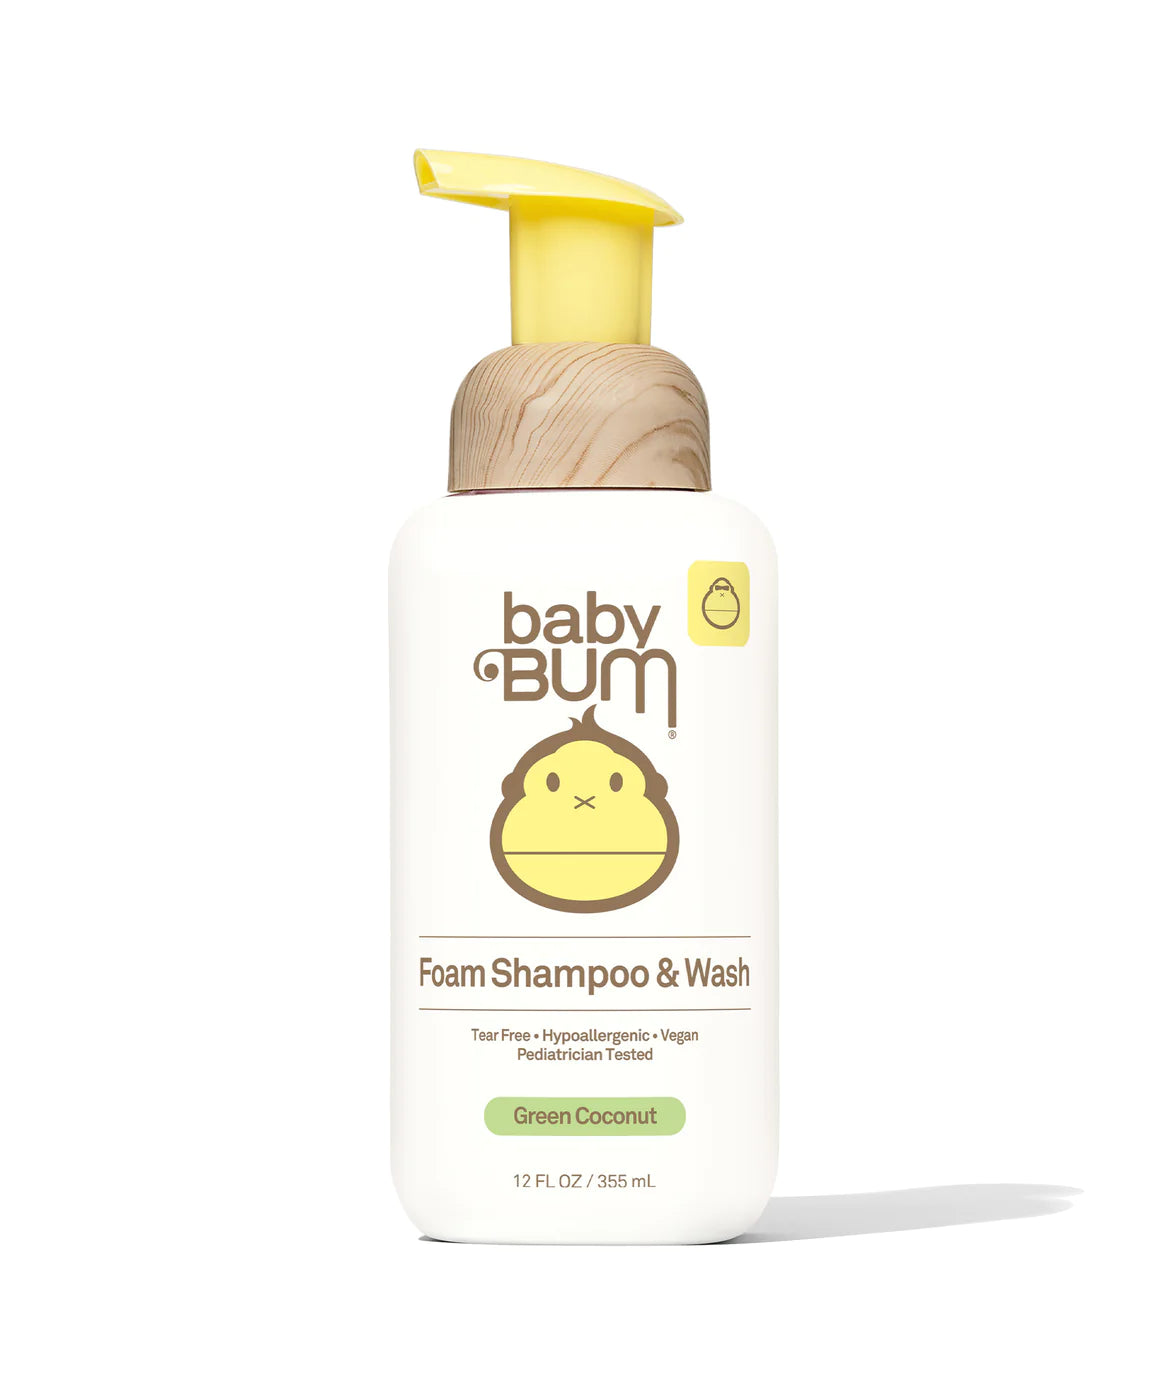 Baby Bum Green Coconut Foaming Shampoo & Wash by Sun Bum